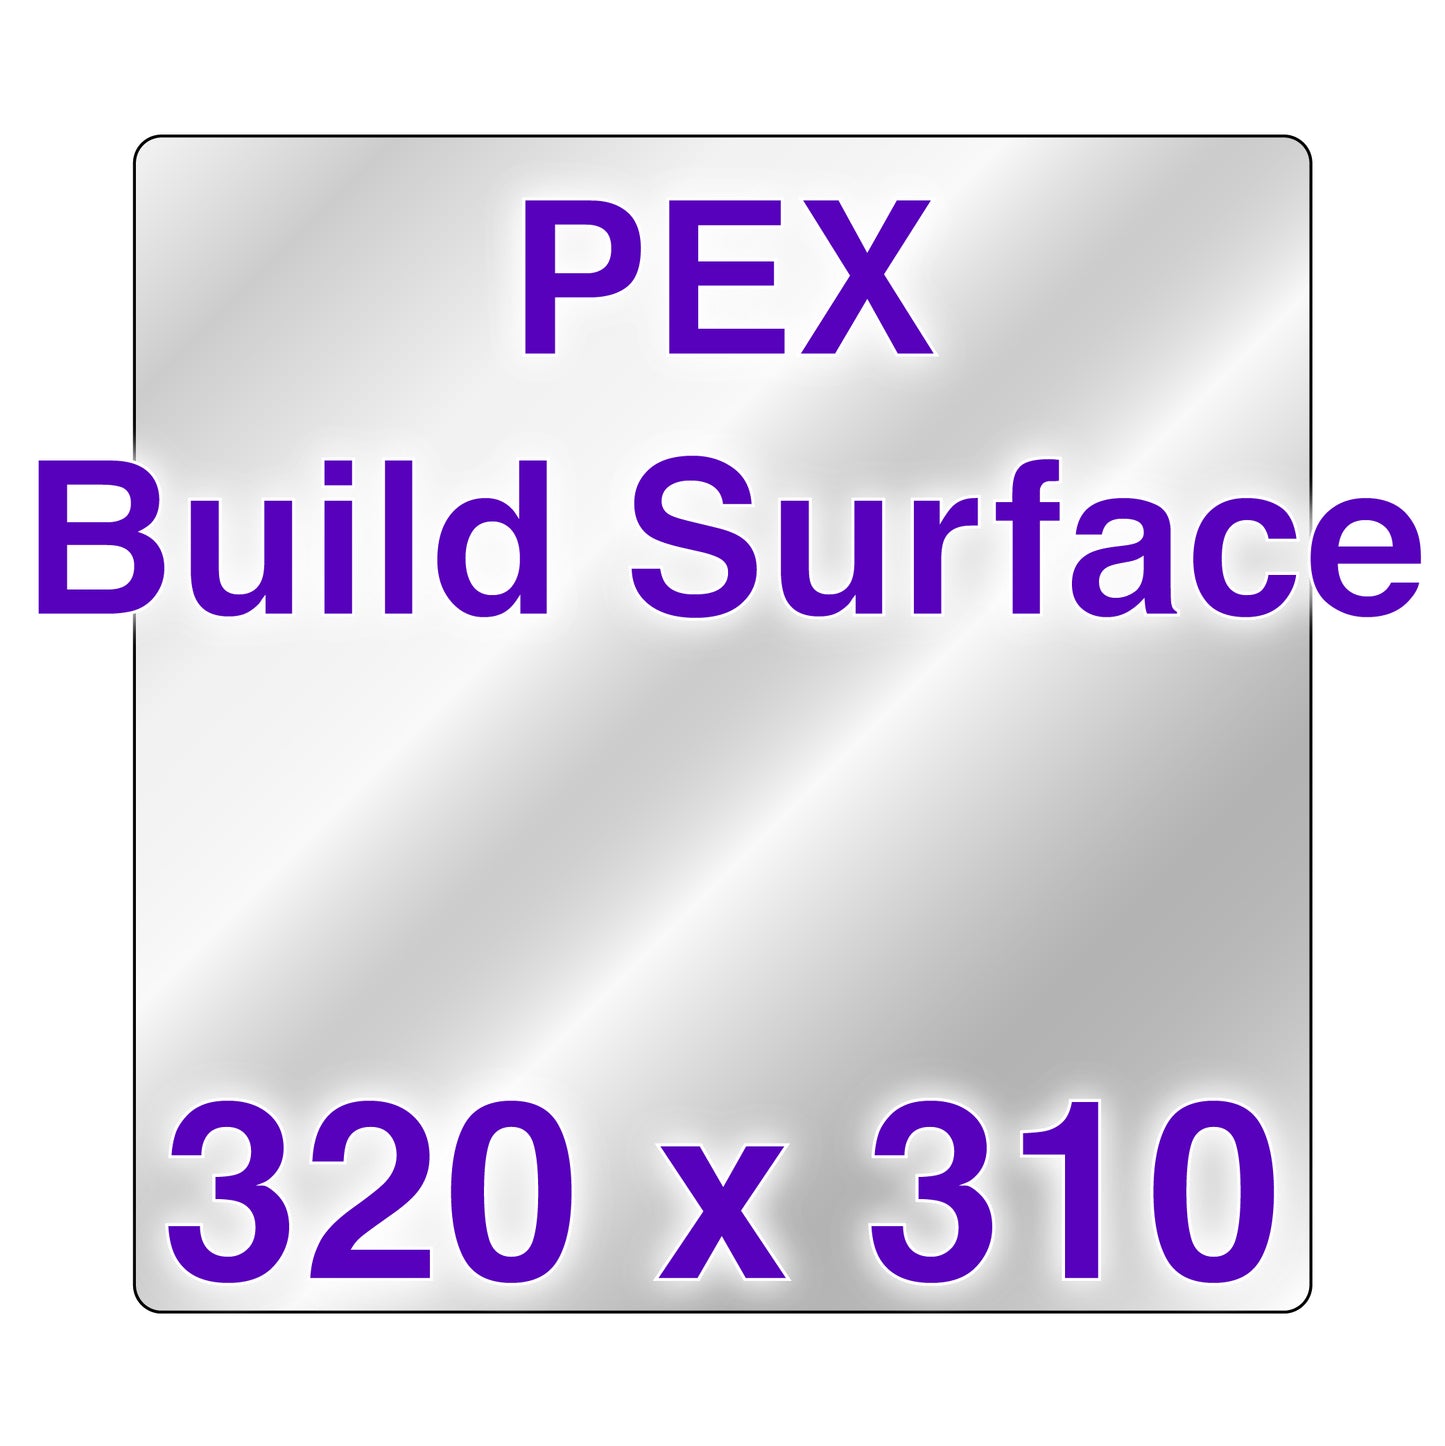 PEX Build Surface - 320 x 310